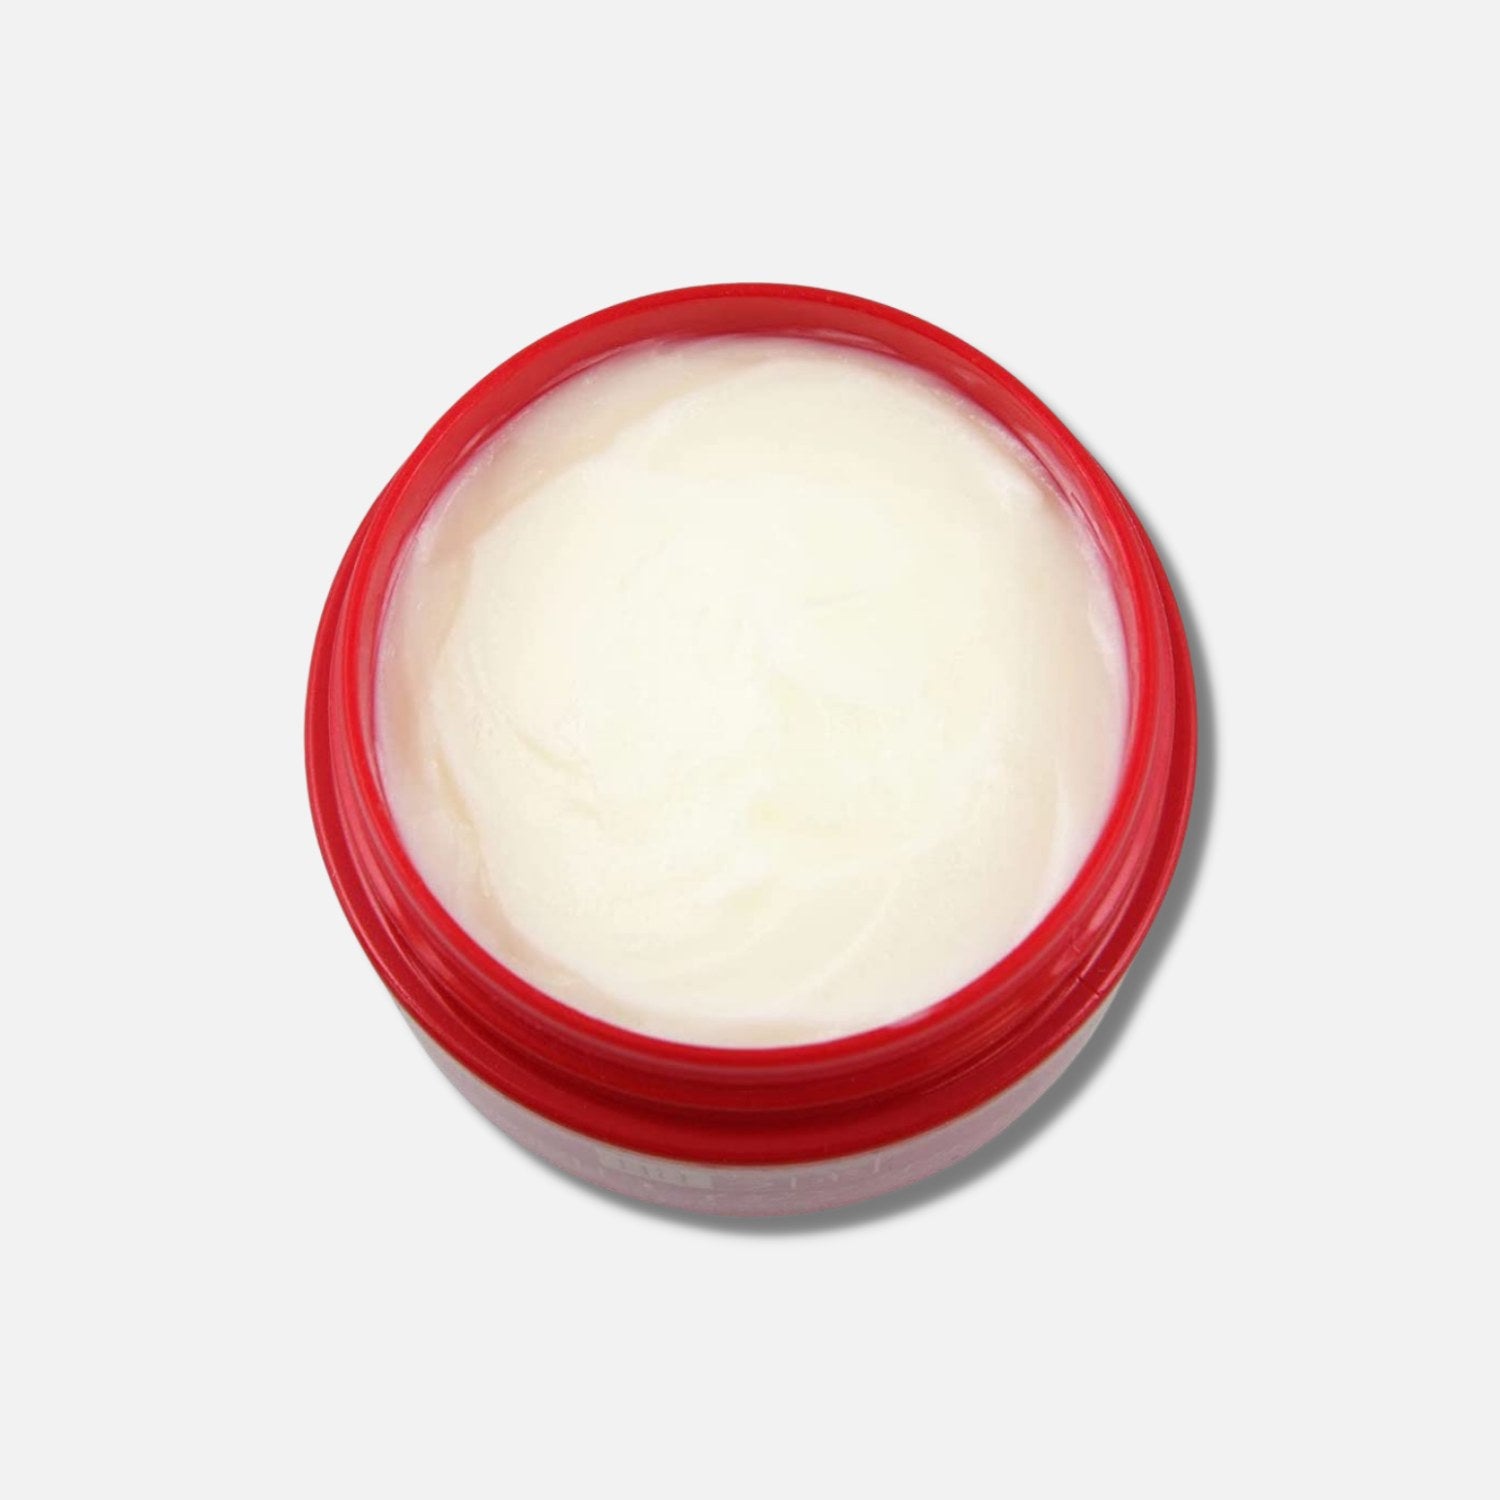 Hada Labo Ageing Care Medicated Cream 50g - Buy Me Japan